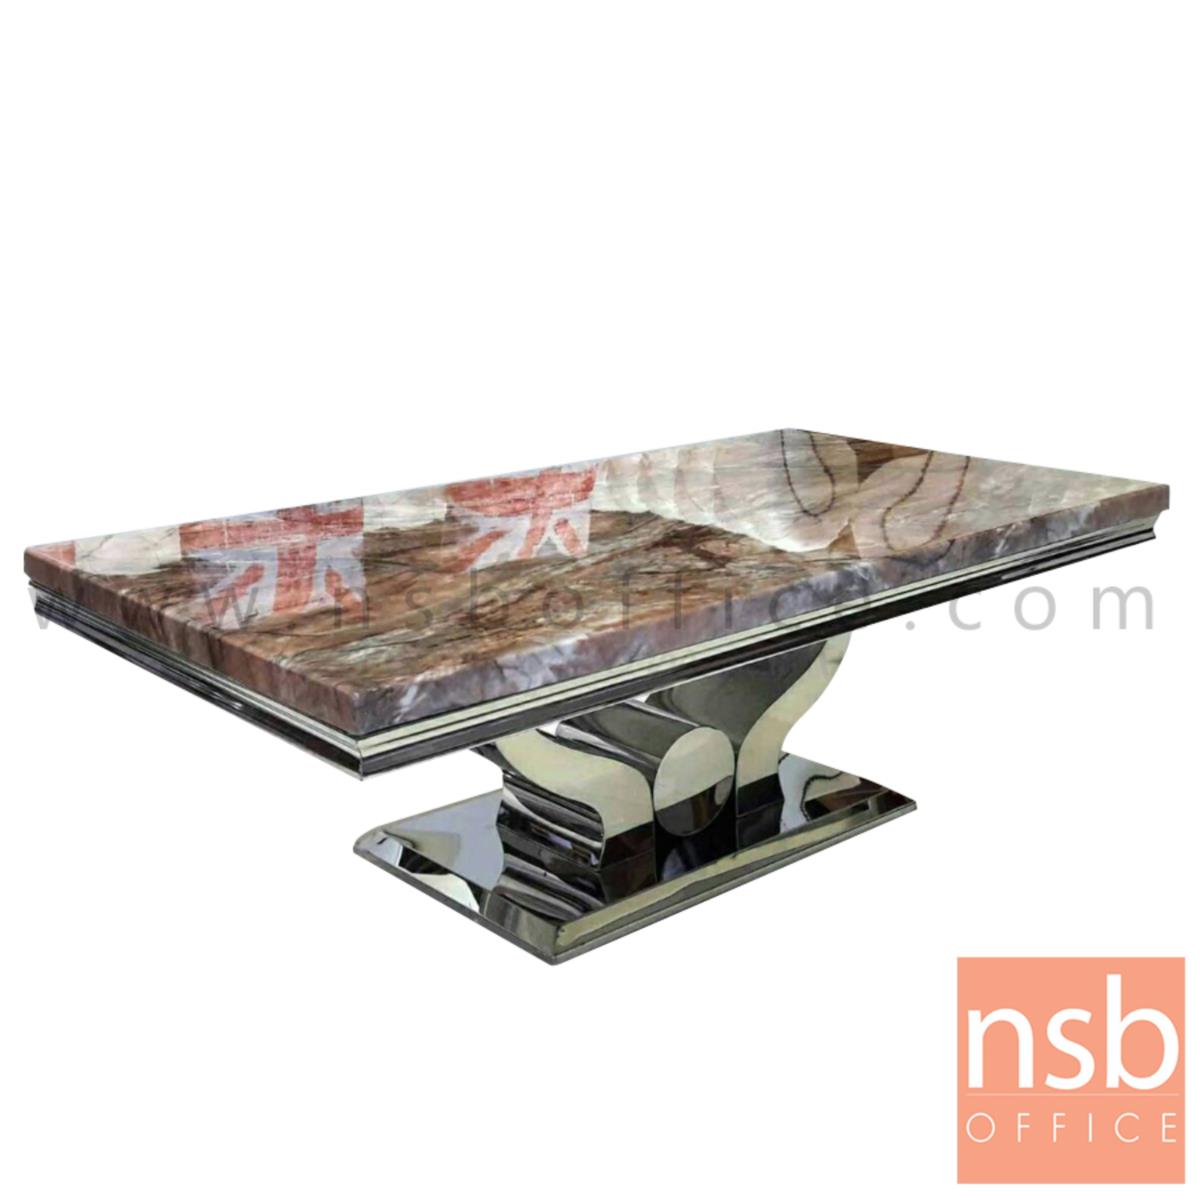 B13A258:โต๊ะกลางหินอ่อน รุ่น Nash (แนช) ขนาด 130W cm. ขาโลหะมันเงา